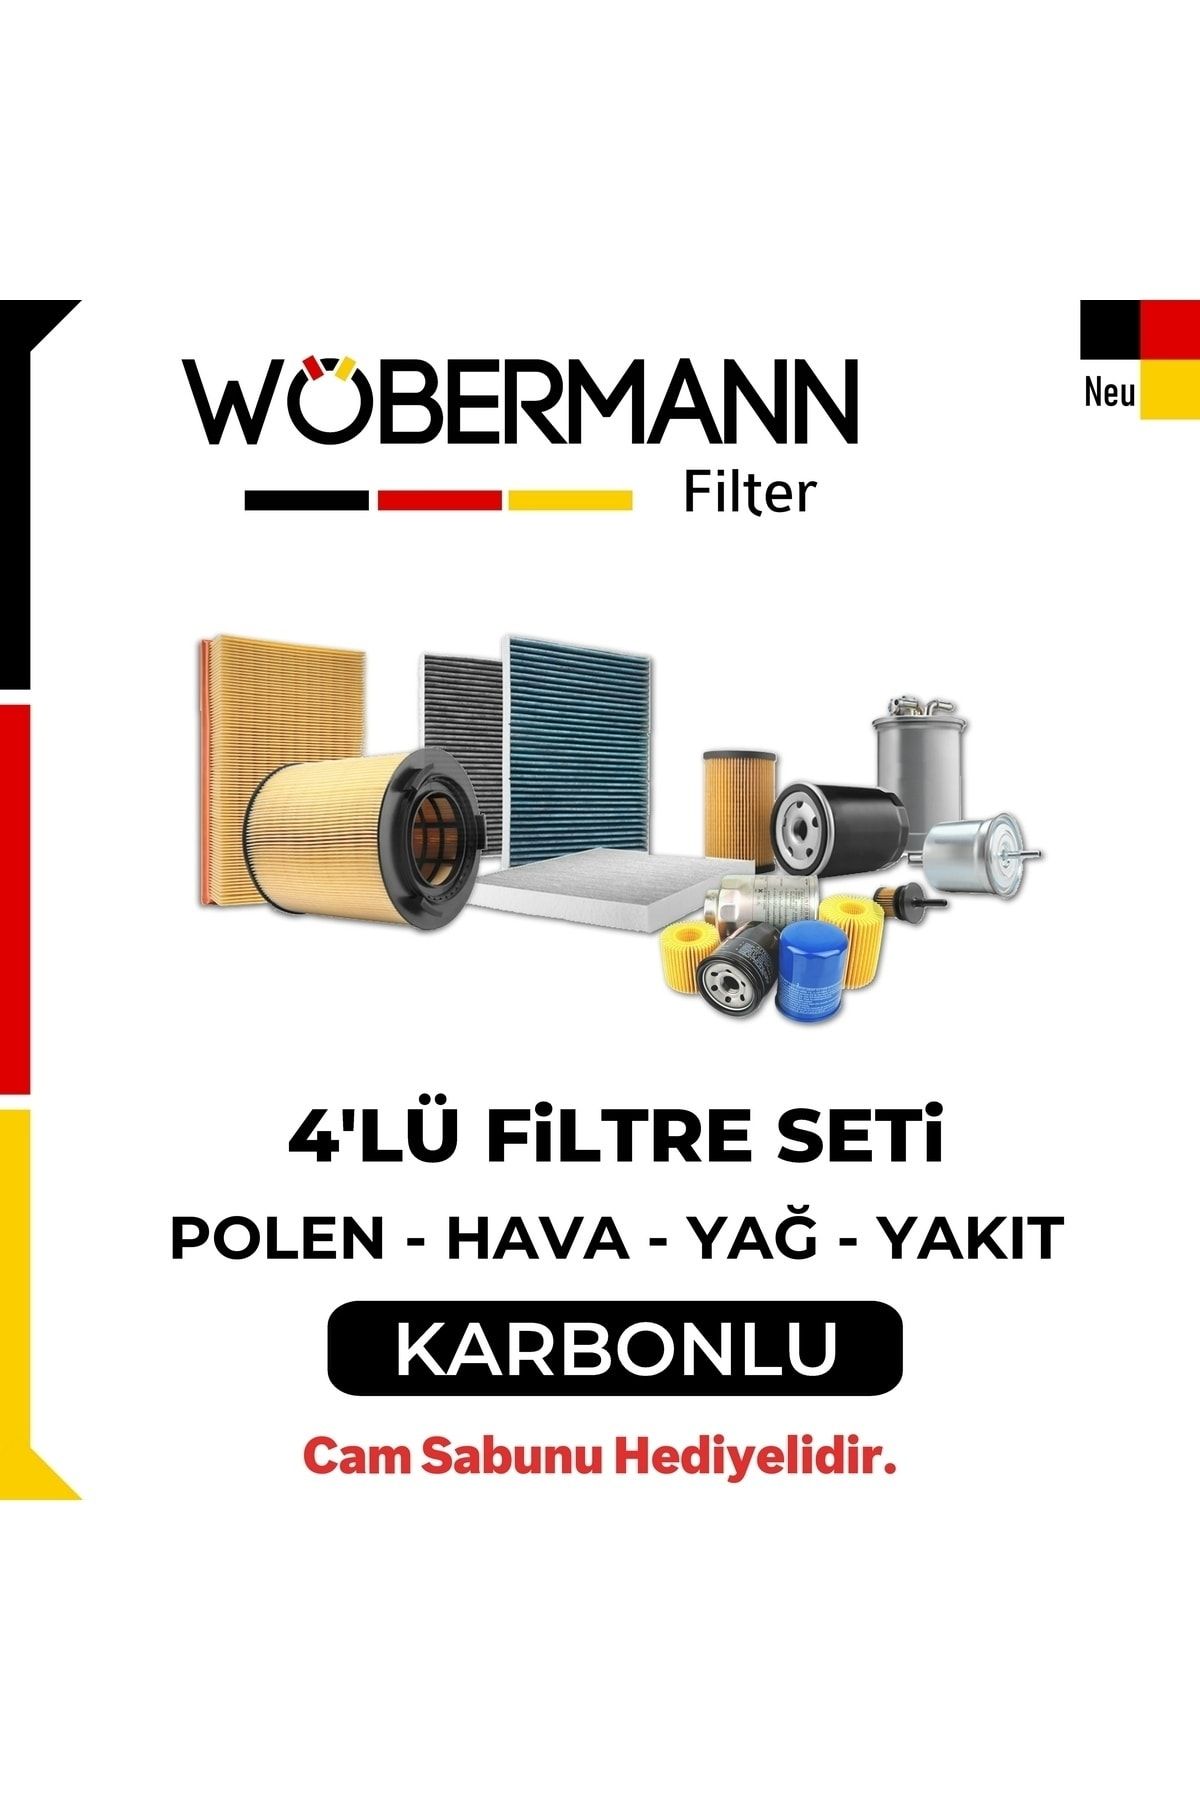 Wöbermann Ford B-max 1.5 Tdcı Filtre Bakım Seti 2012-2015 4lü Karbonlu